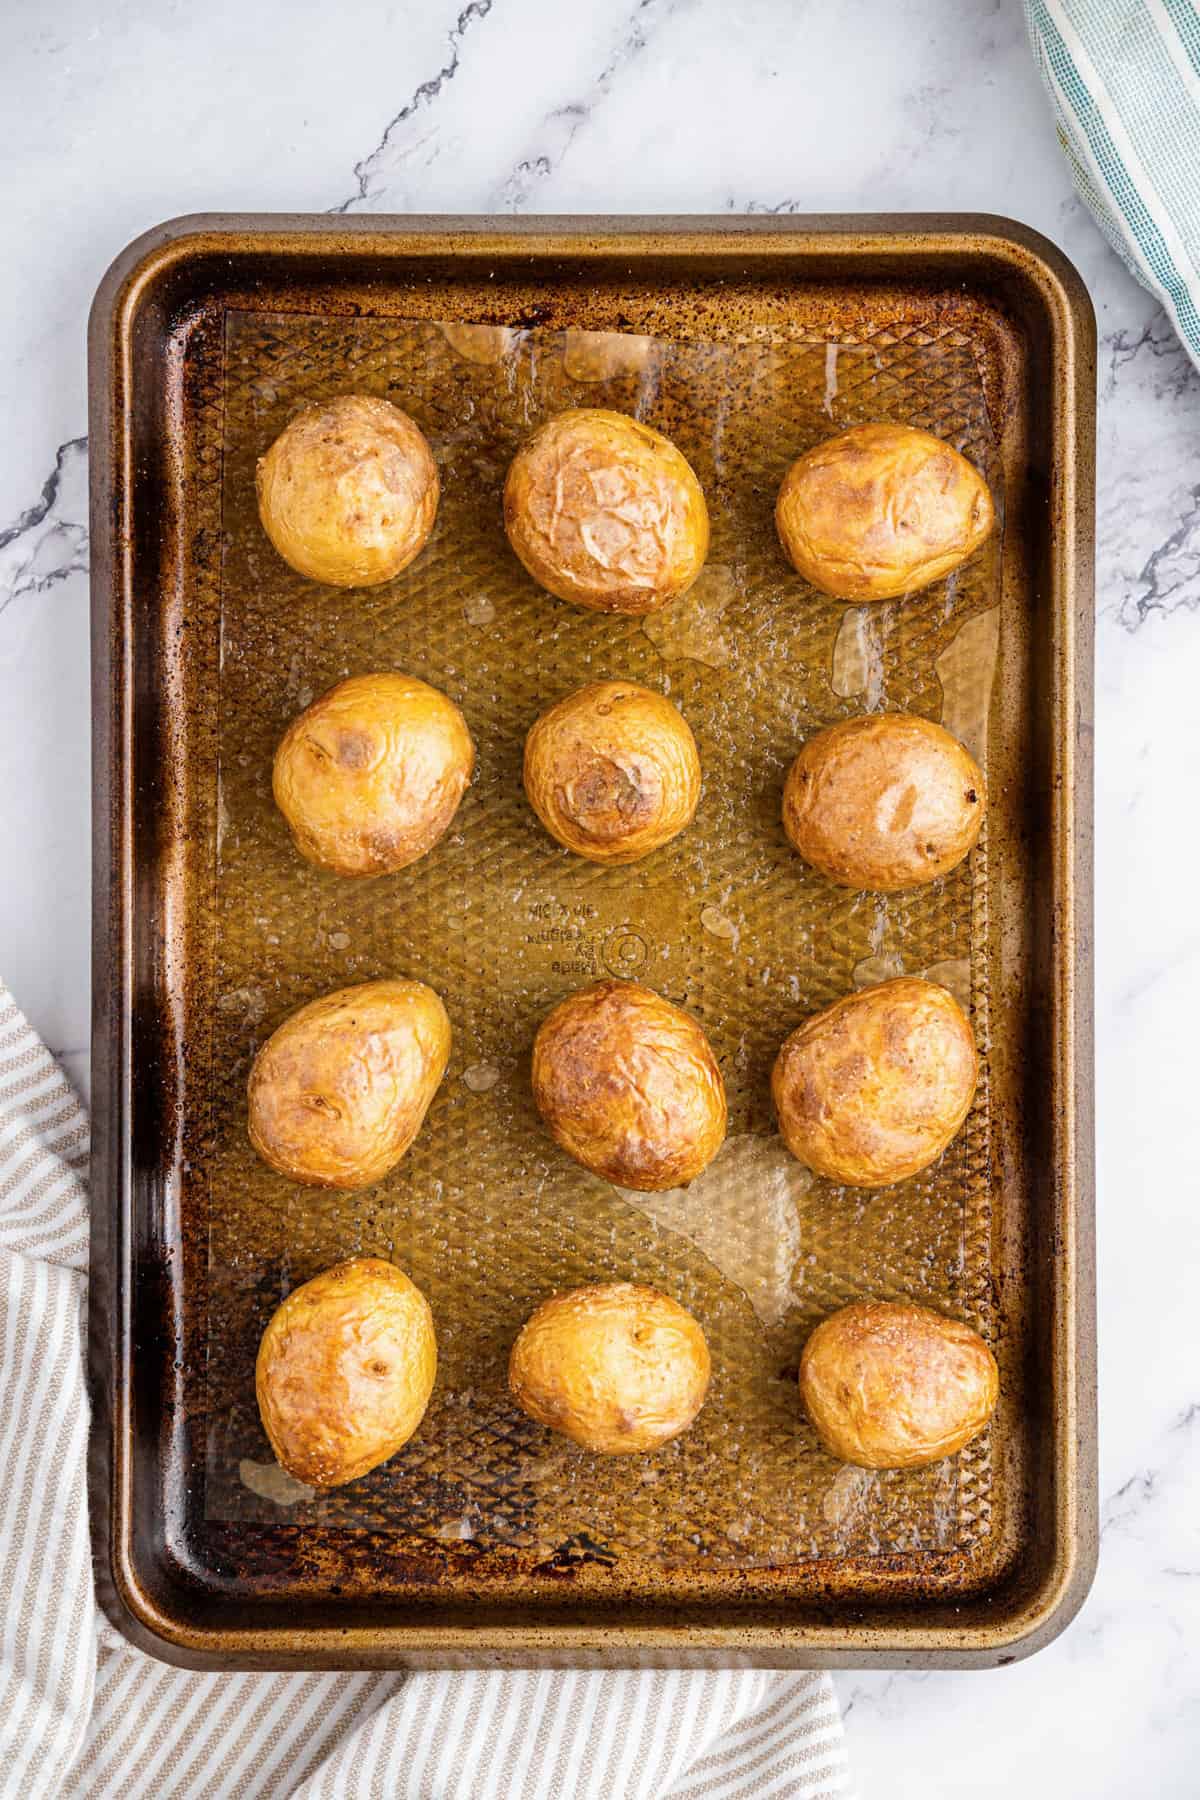 Baked potatoes on baking sheet for Mini Twice Baked Potatoes